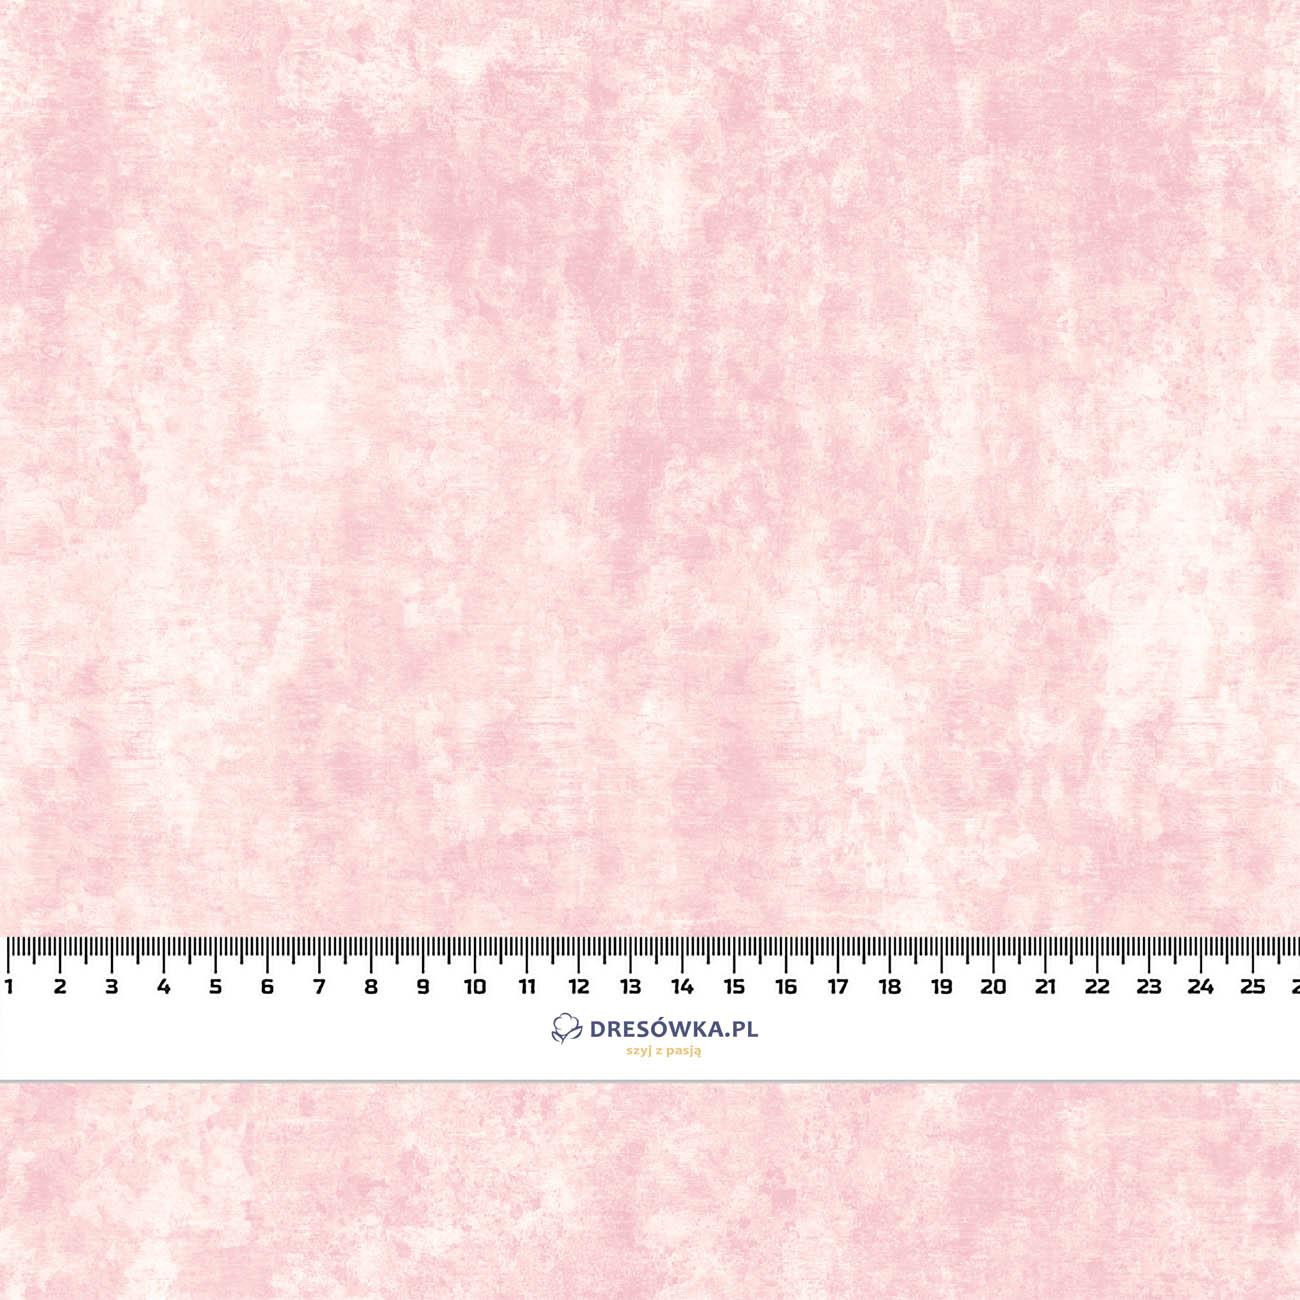 GRUNGE (pale pink) - Waterproof woven fabric